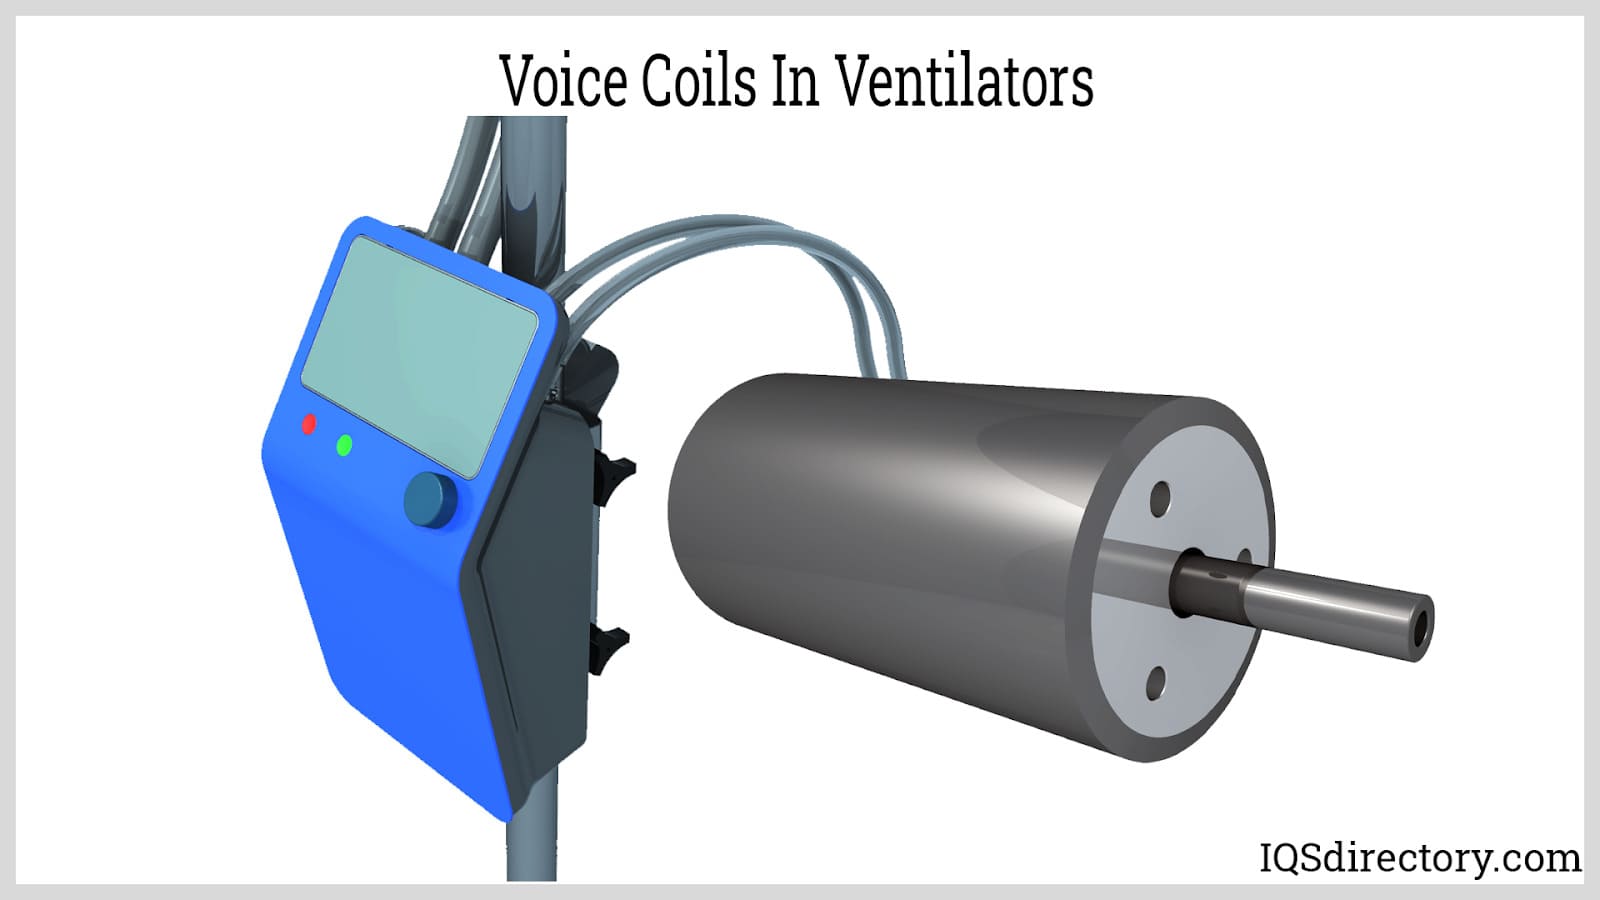 Voice Coils in Ventilators